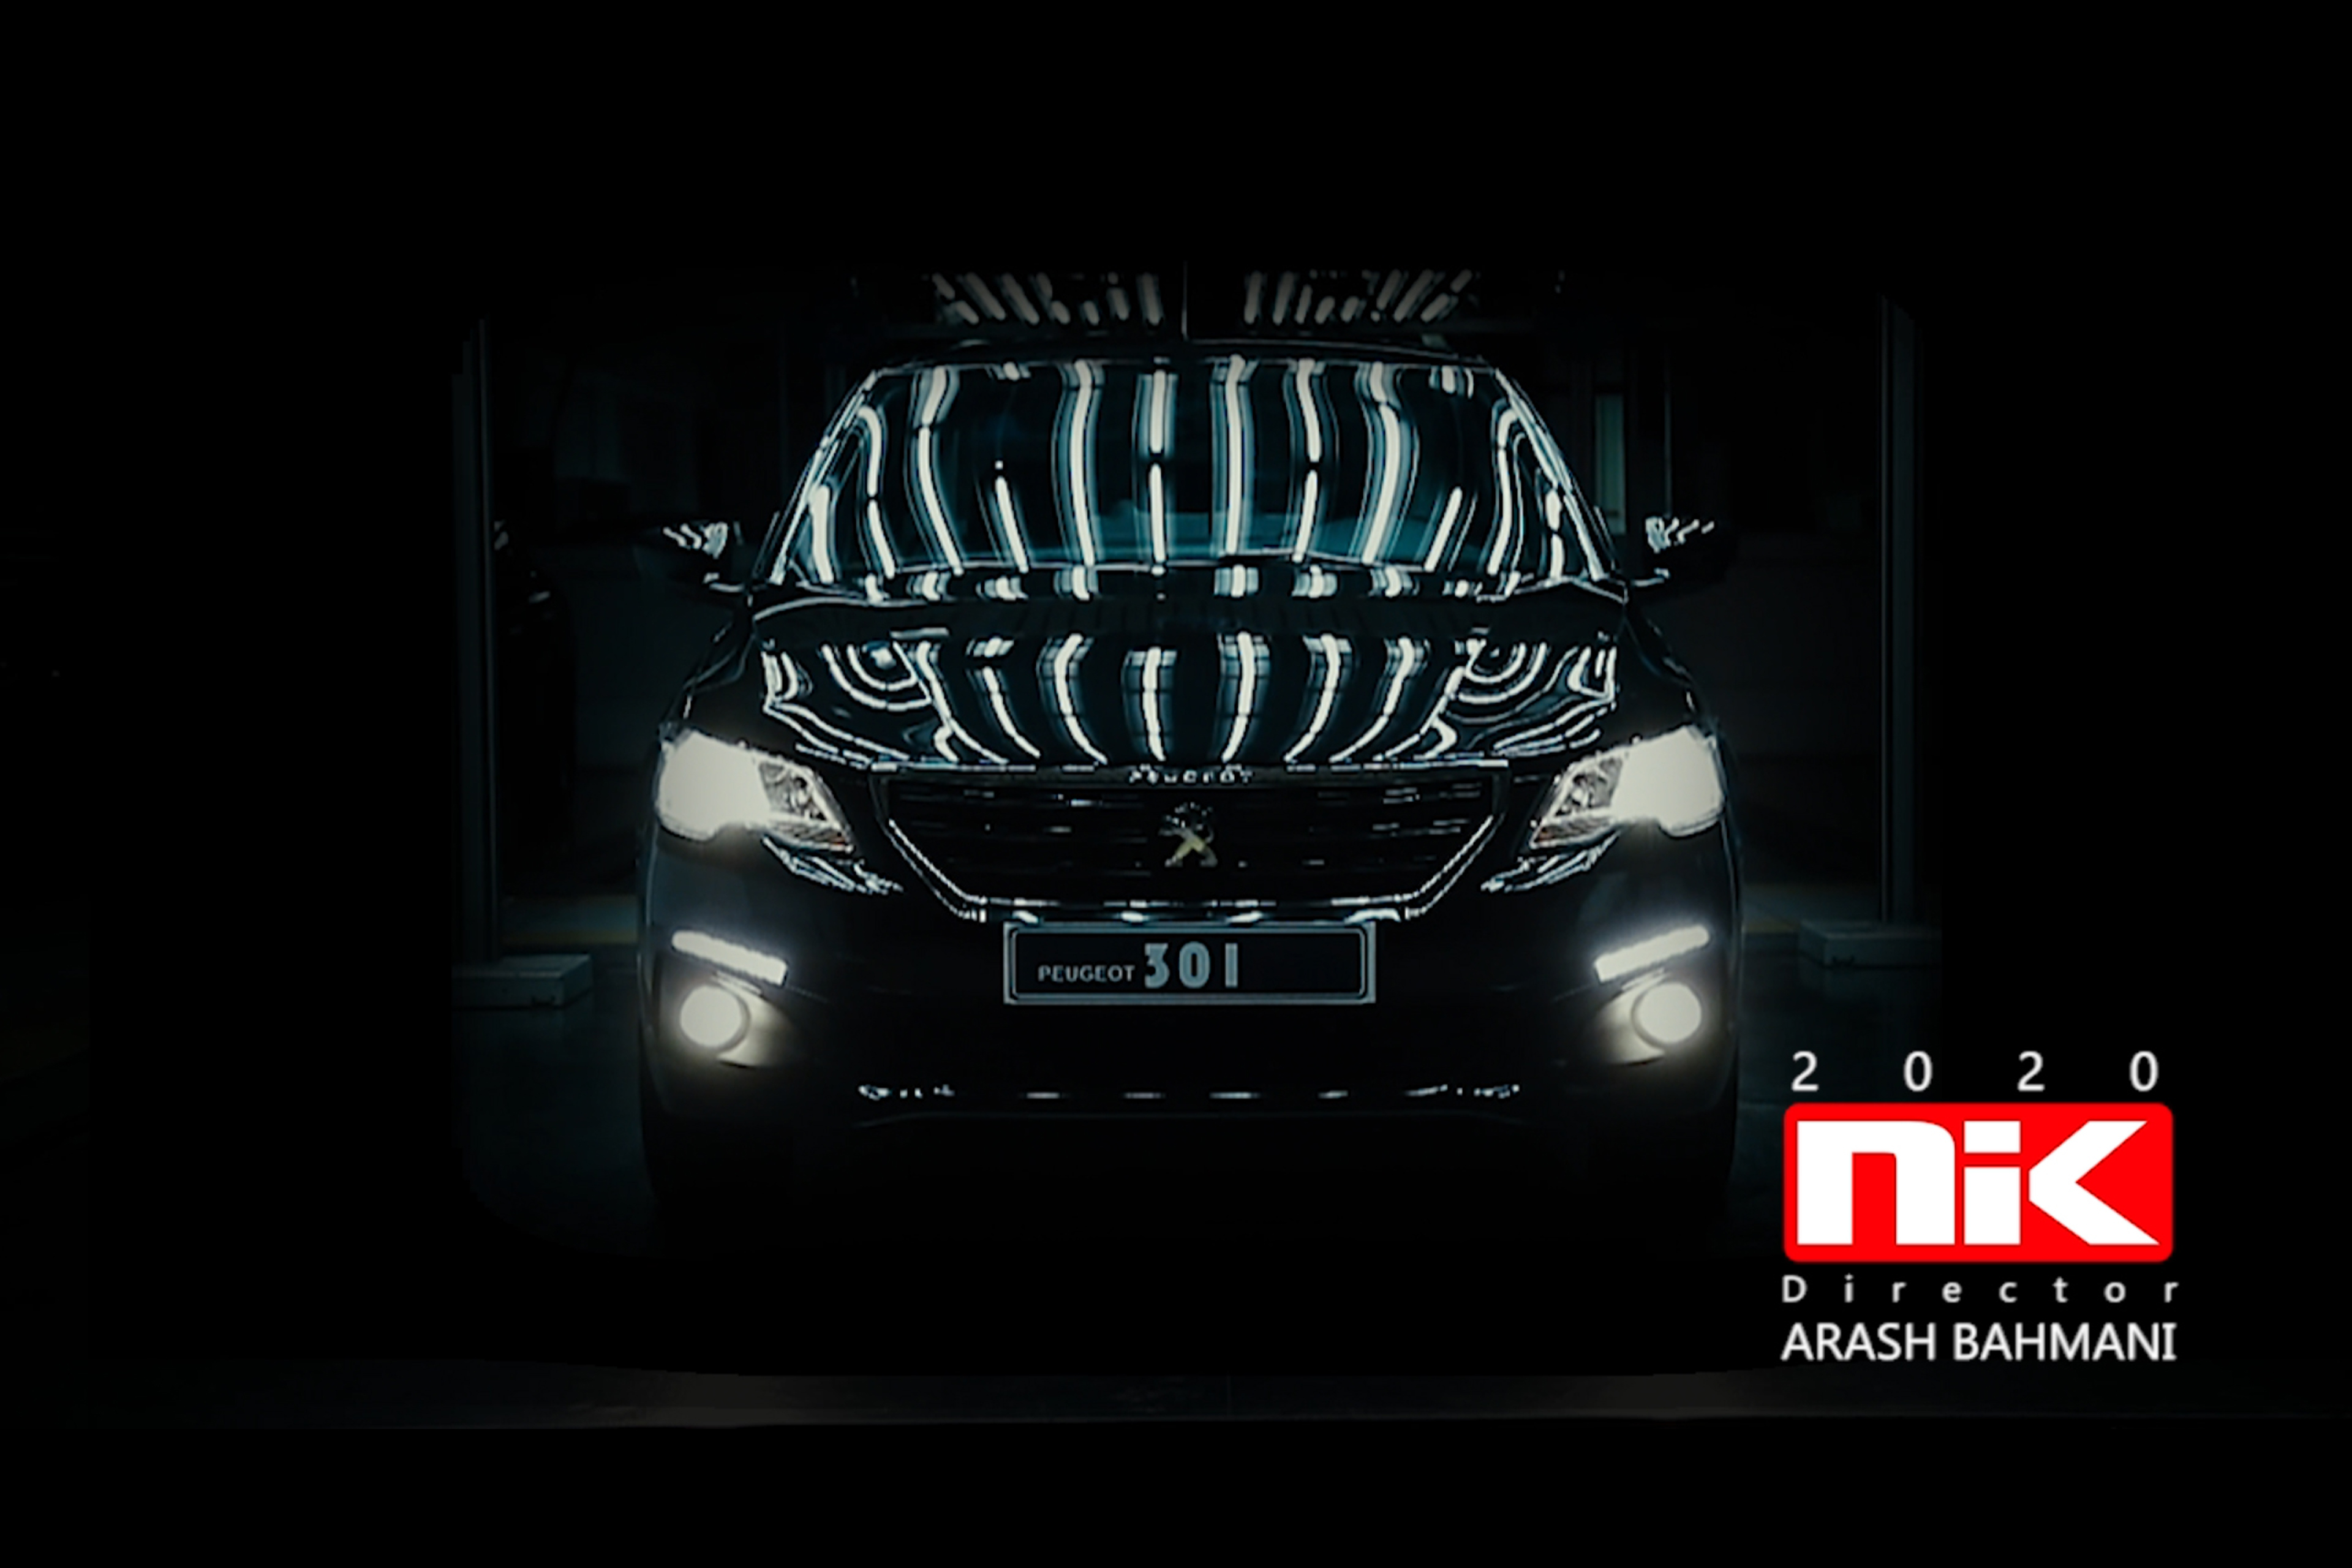 TV commercial film for Peugeot 301 Iran Khodro Directed By ARASH BAHMANI - a black Peugeot 301